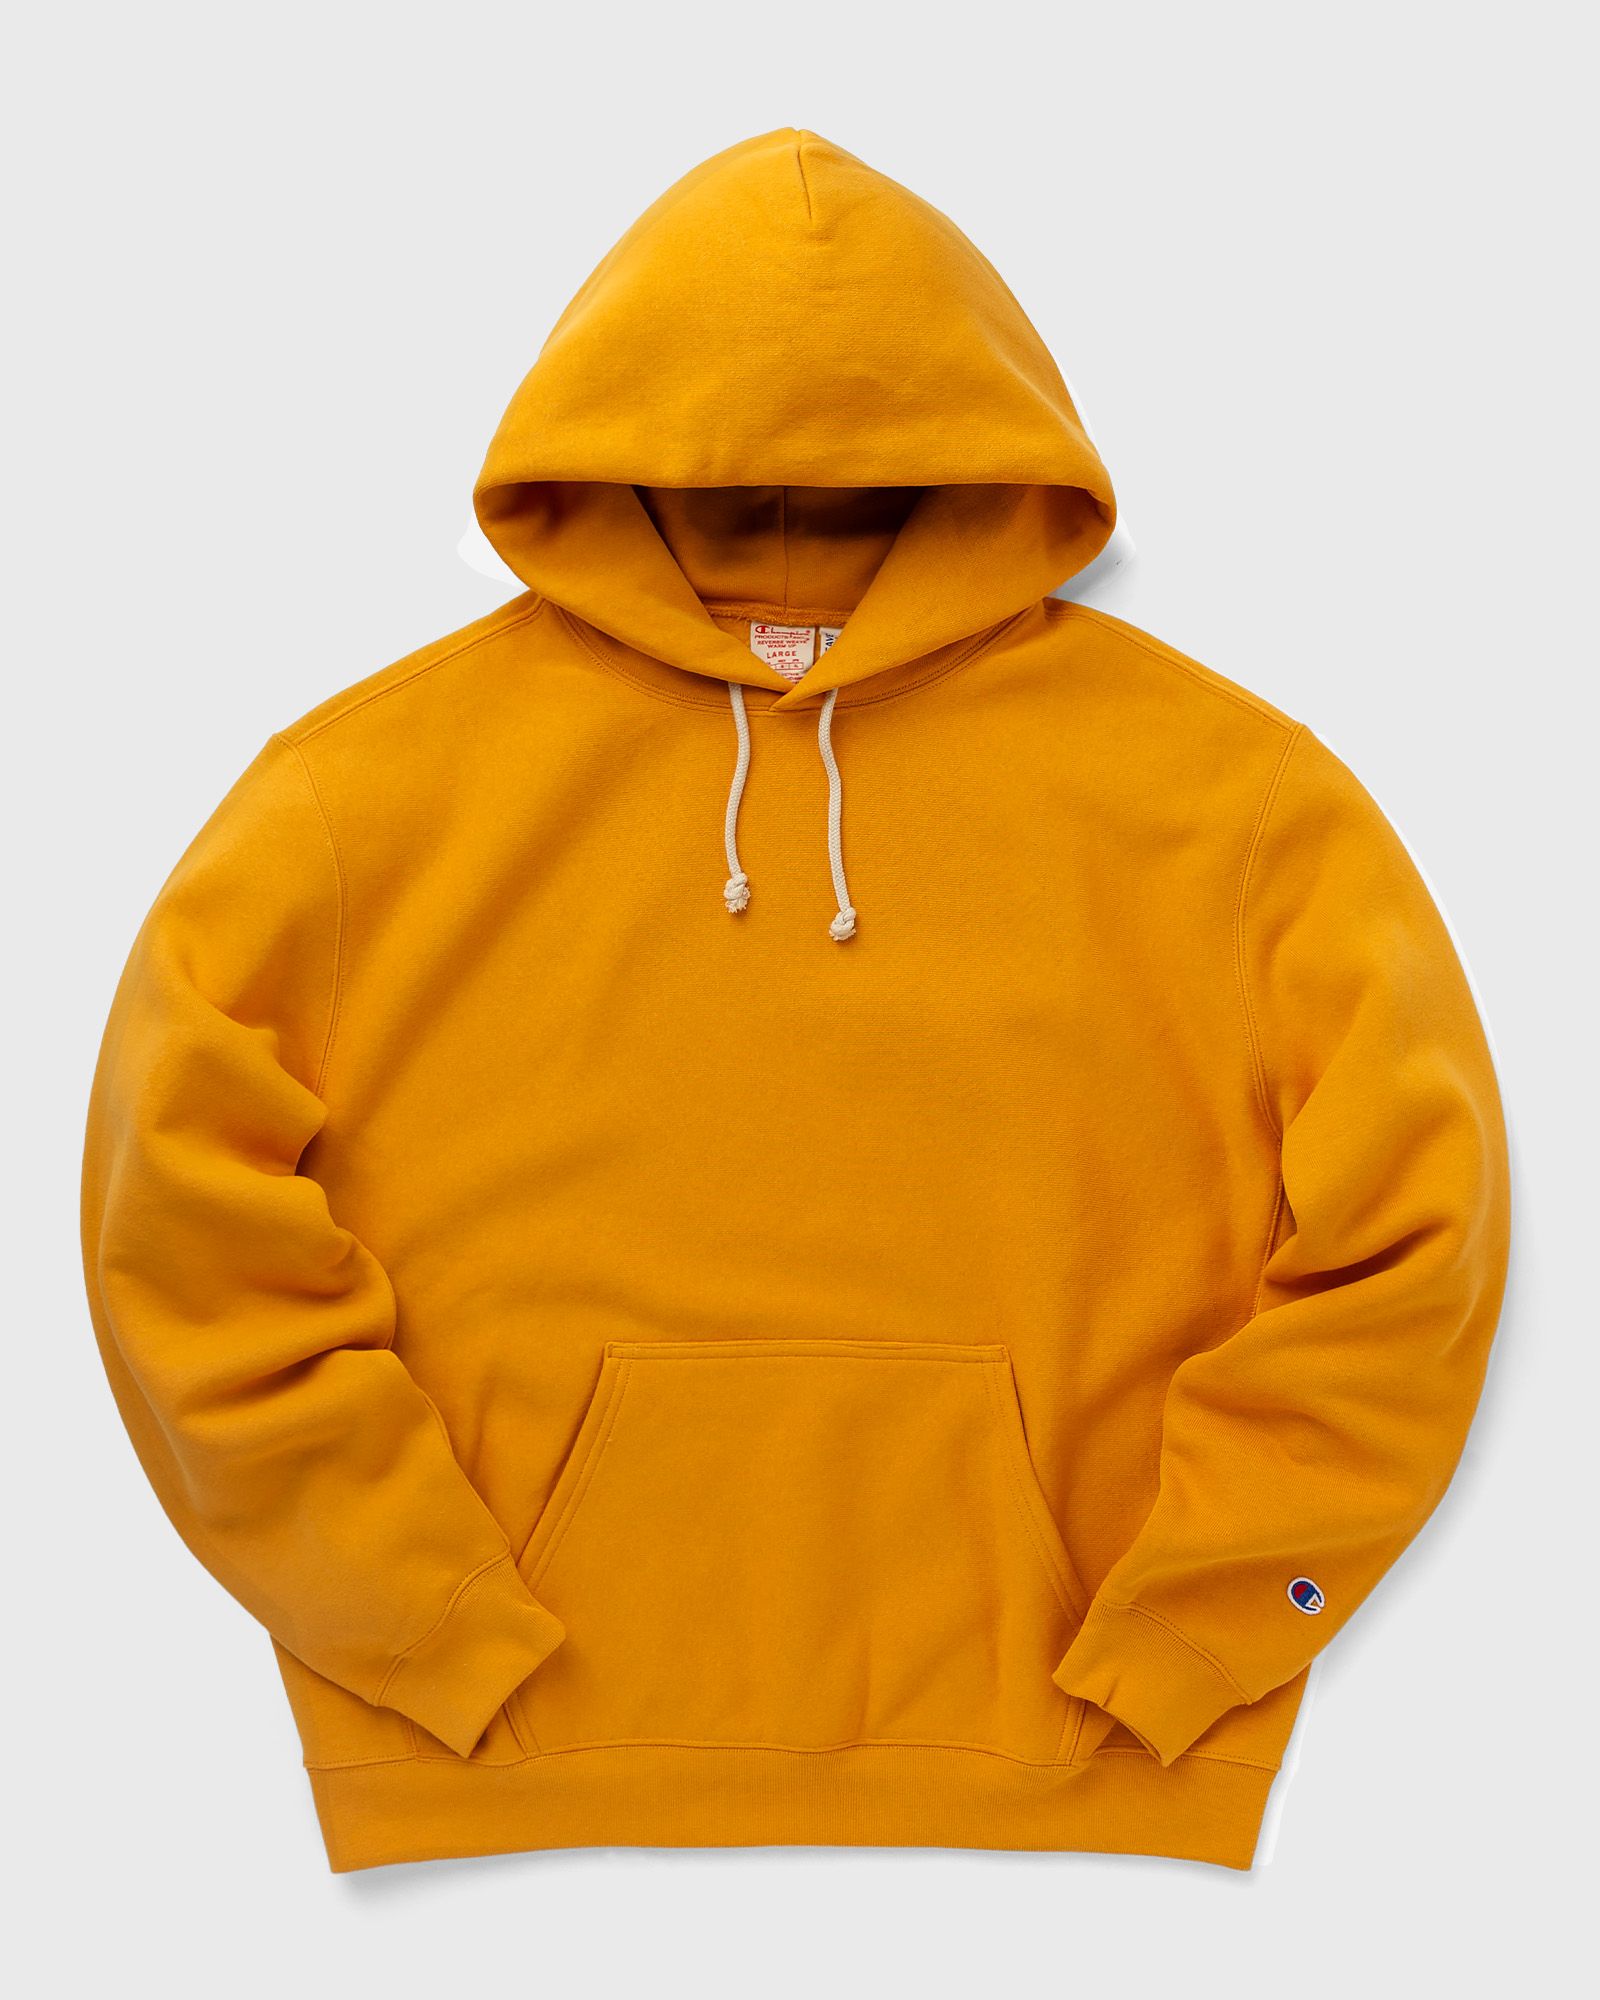 CHAMPION - hooded sweatshirt men hoodies yellow in größe:xl